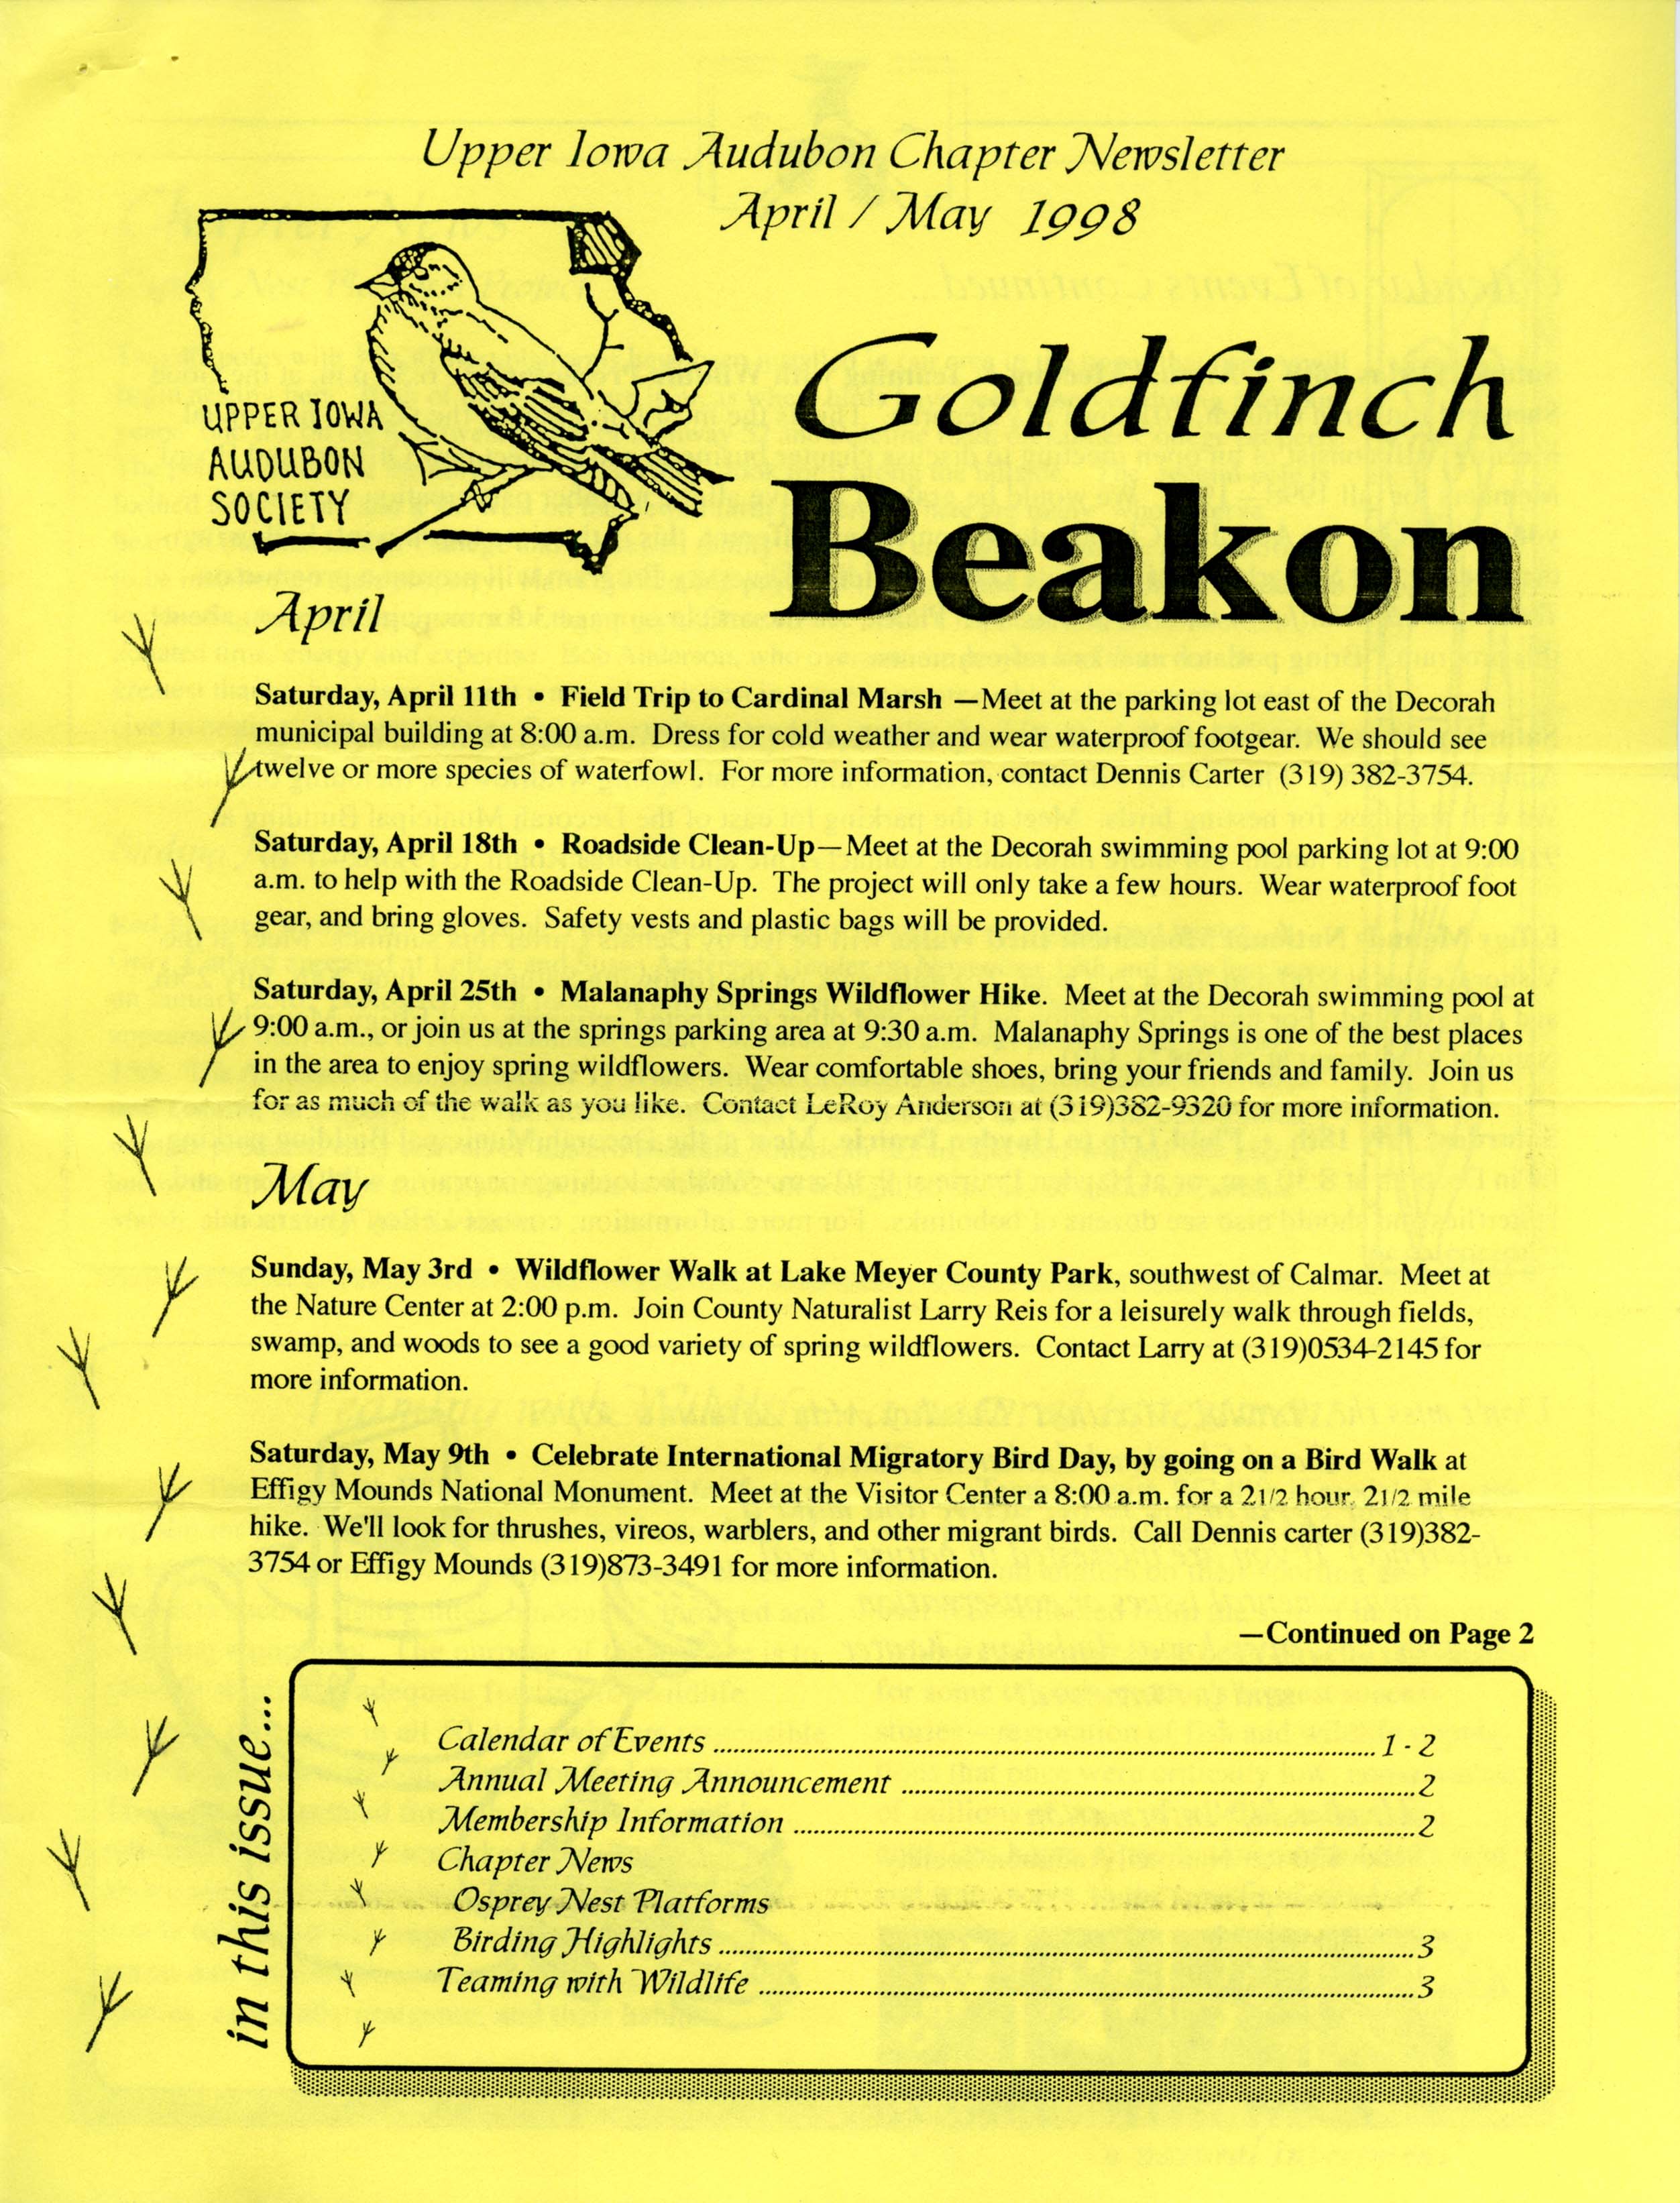 Goldfinch beakon, April/May 1998